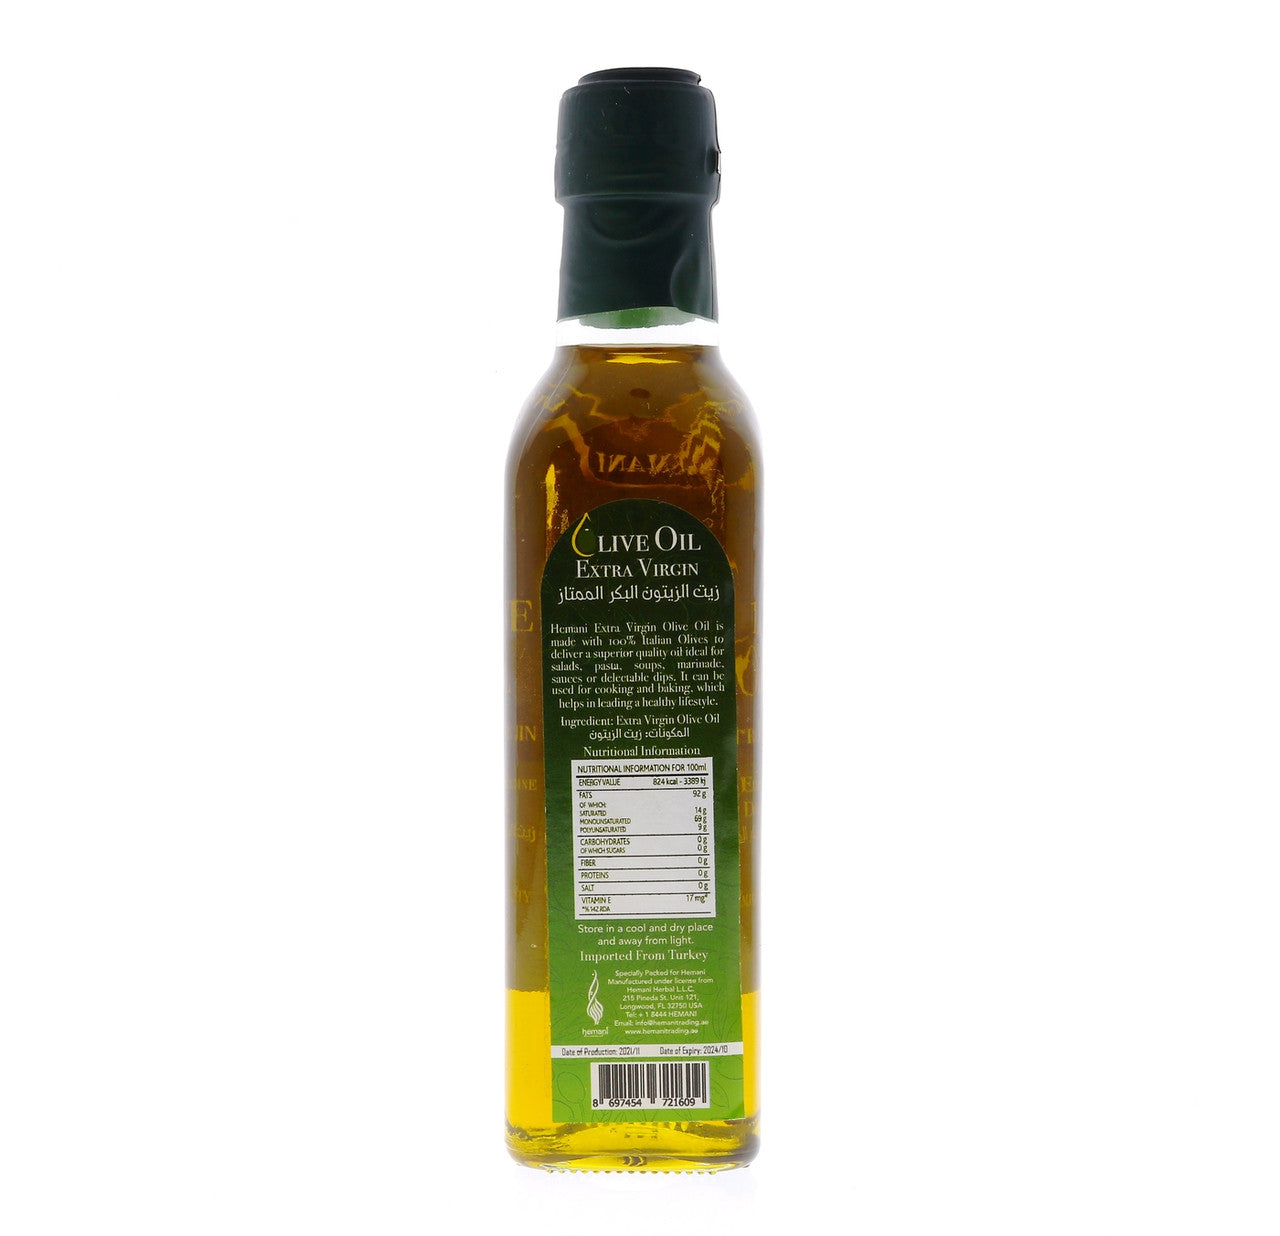 HEMANI Extra Virgin Olive Oil 250mL (8.45 FL OZ)